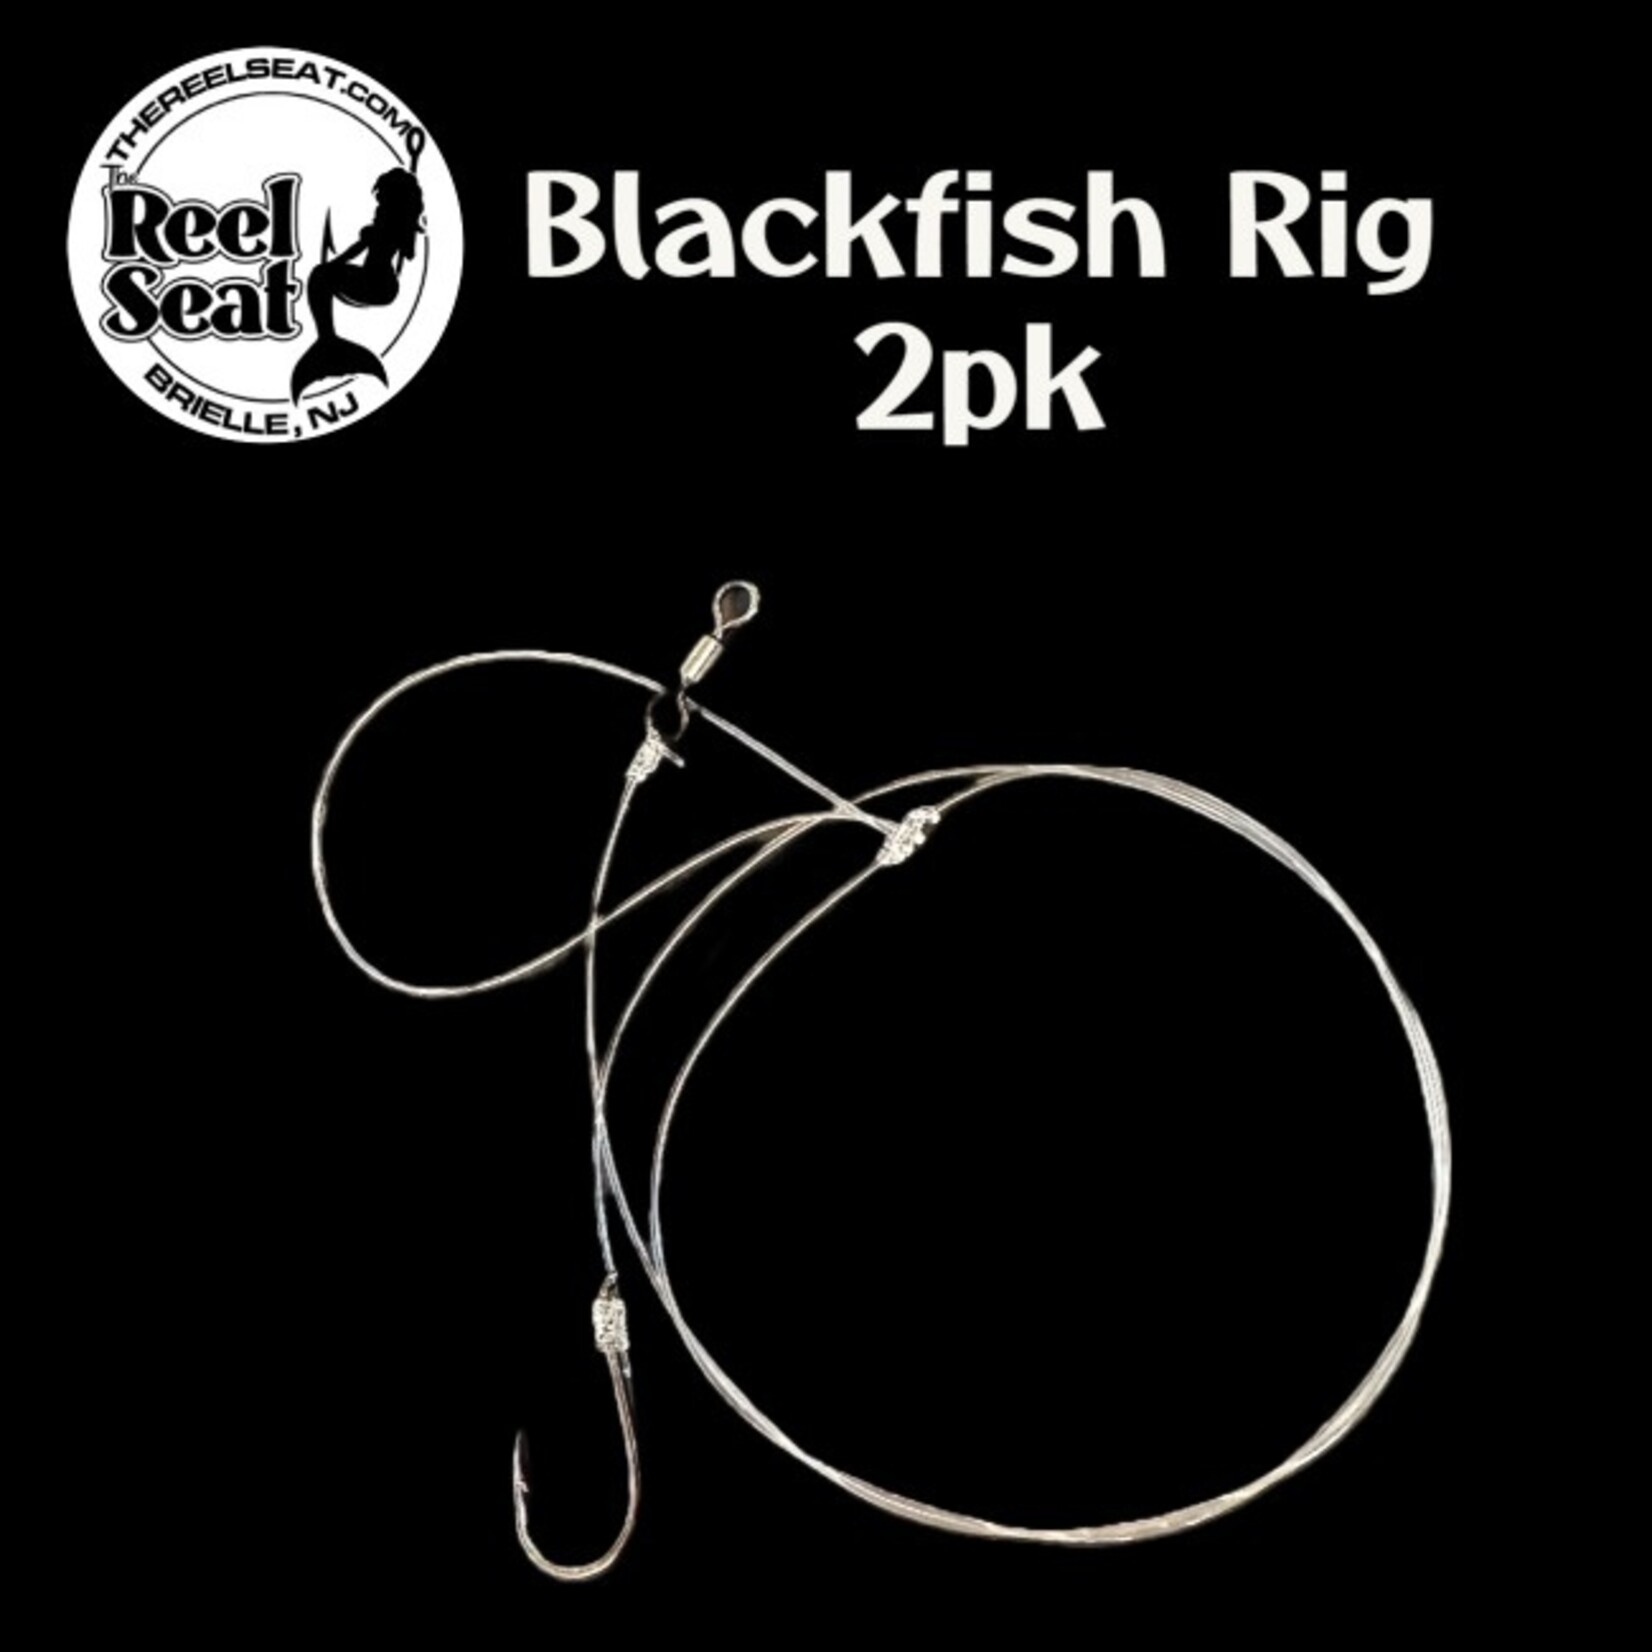 The Reel Seat RS Blackfish Rig 2pk